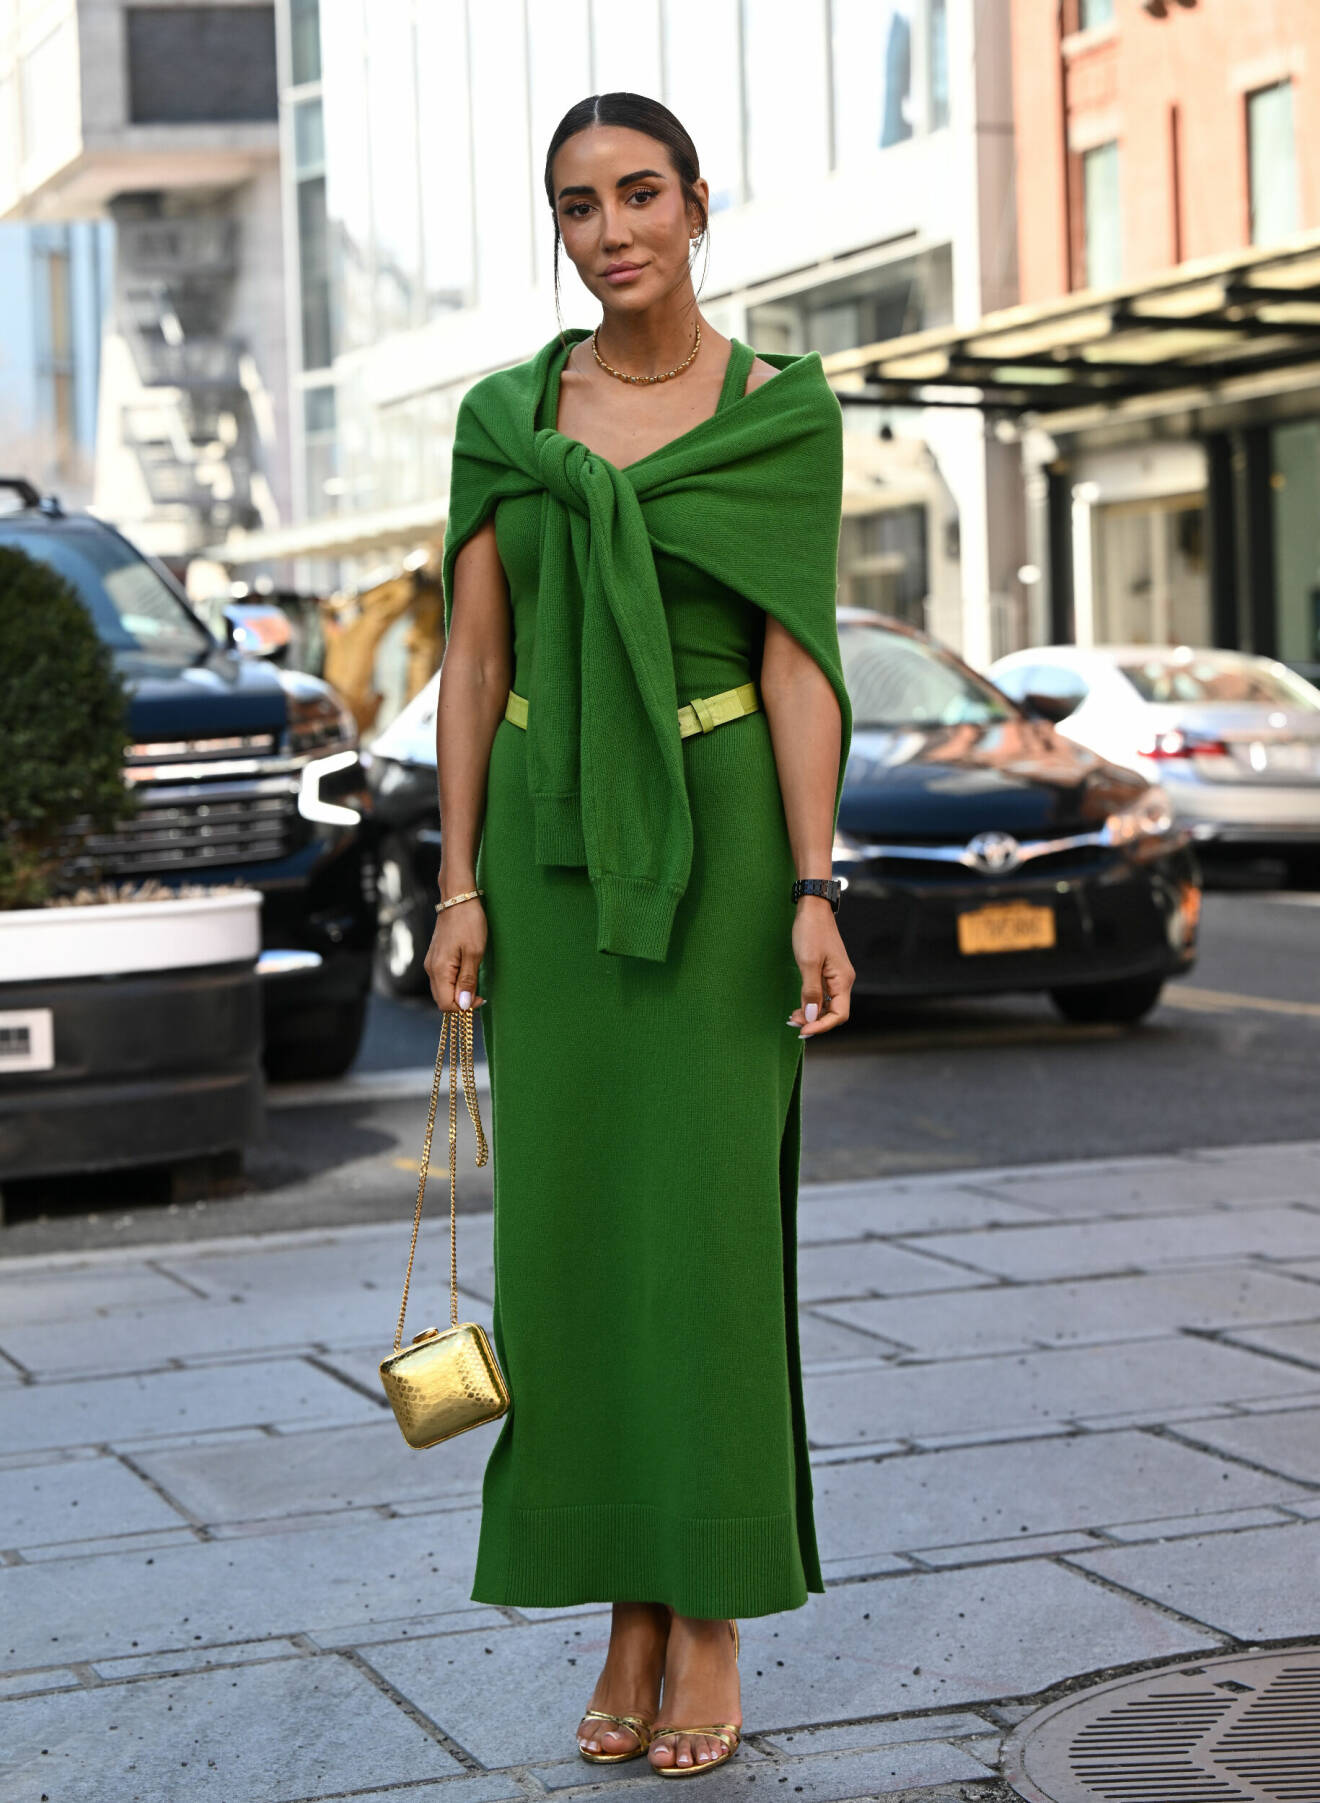 Trendig färgmatchad outfit under modeveckan i New York.